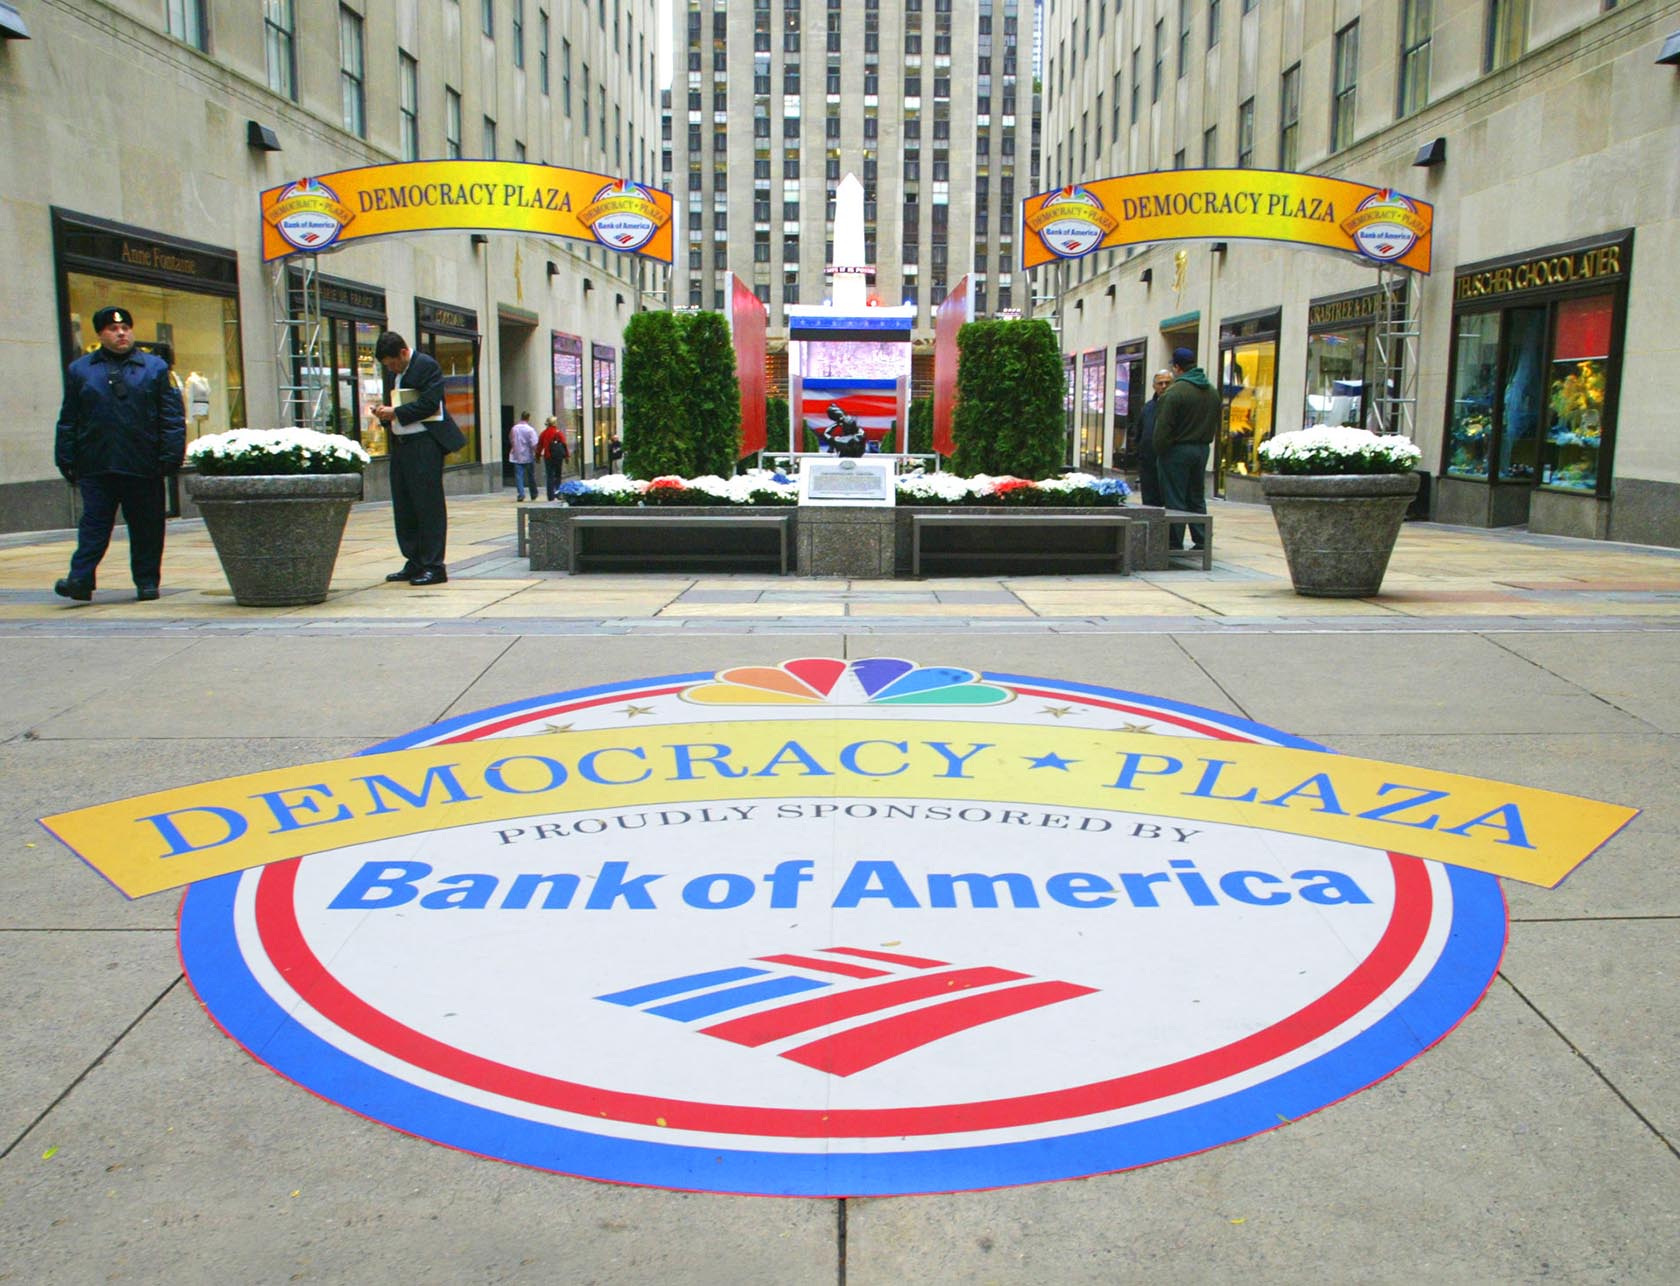 Signage of Bank of America's sponsorship of Democracy Plaza